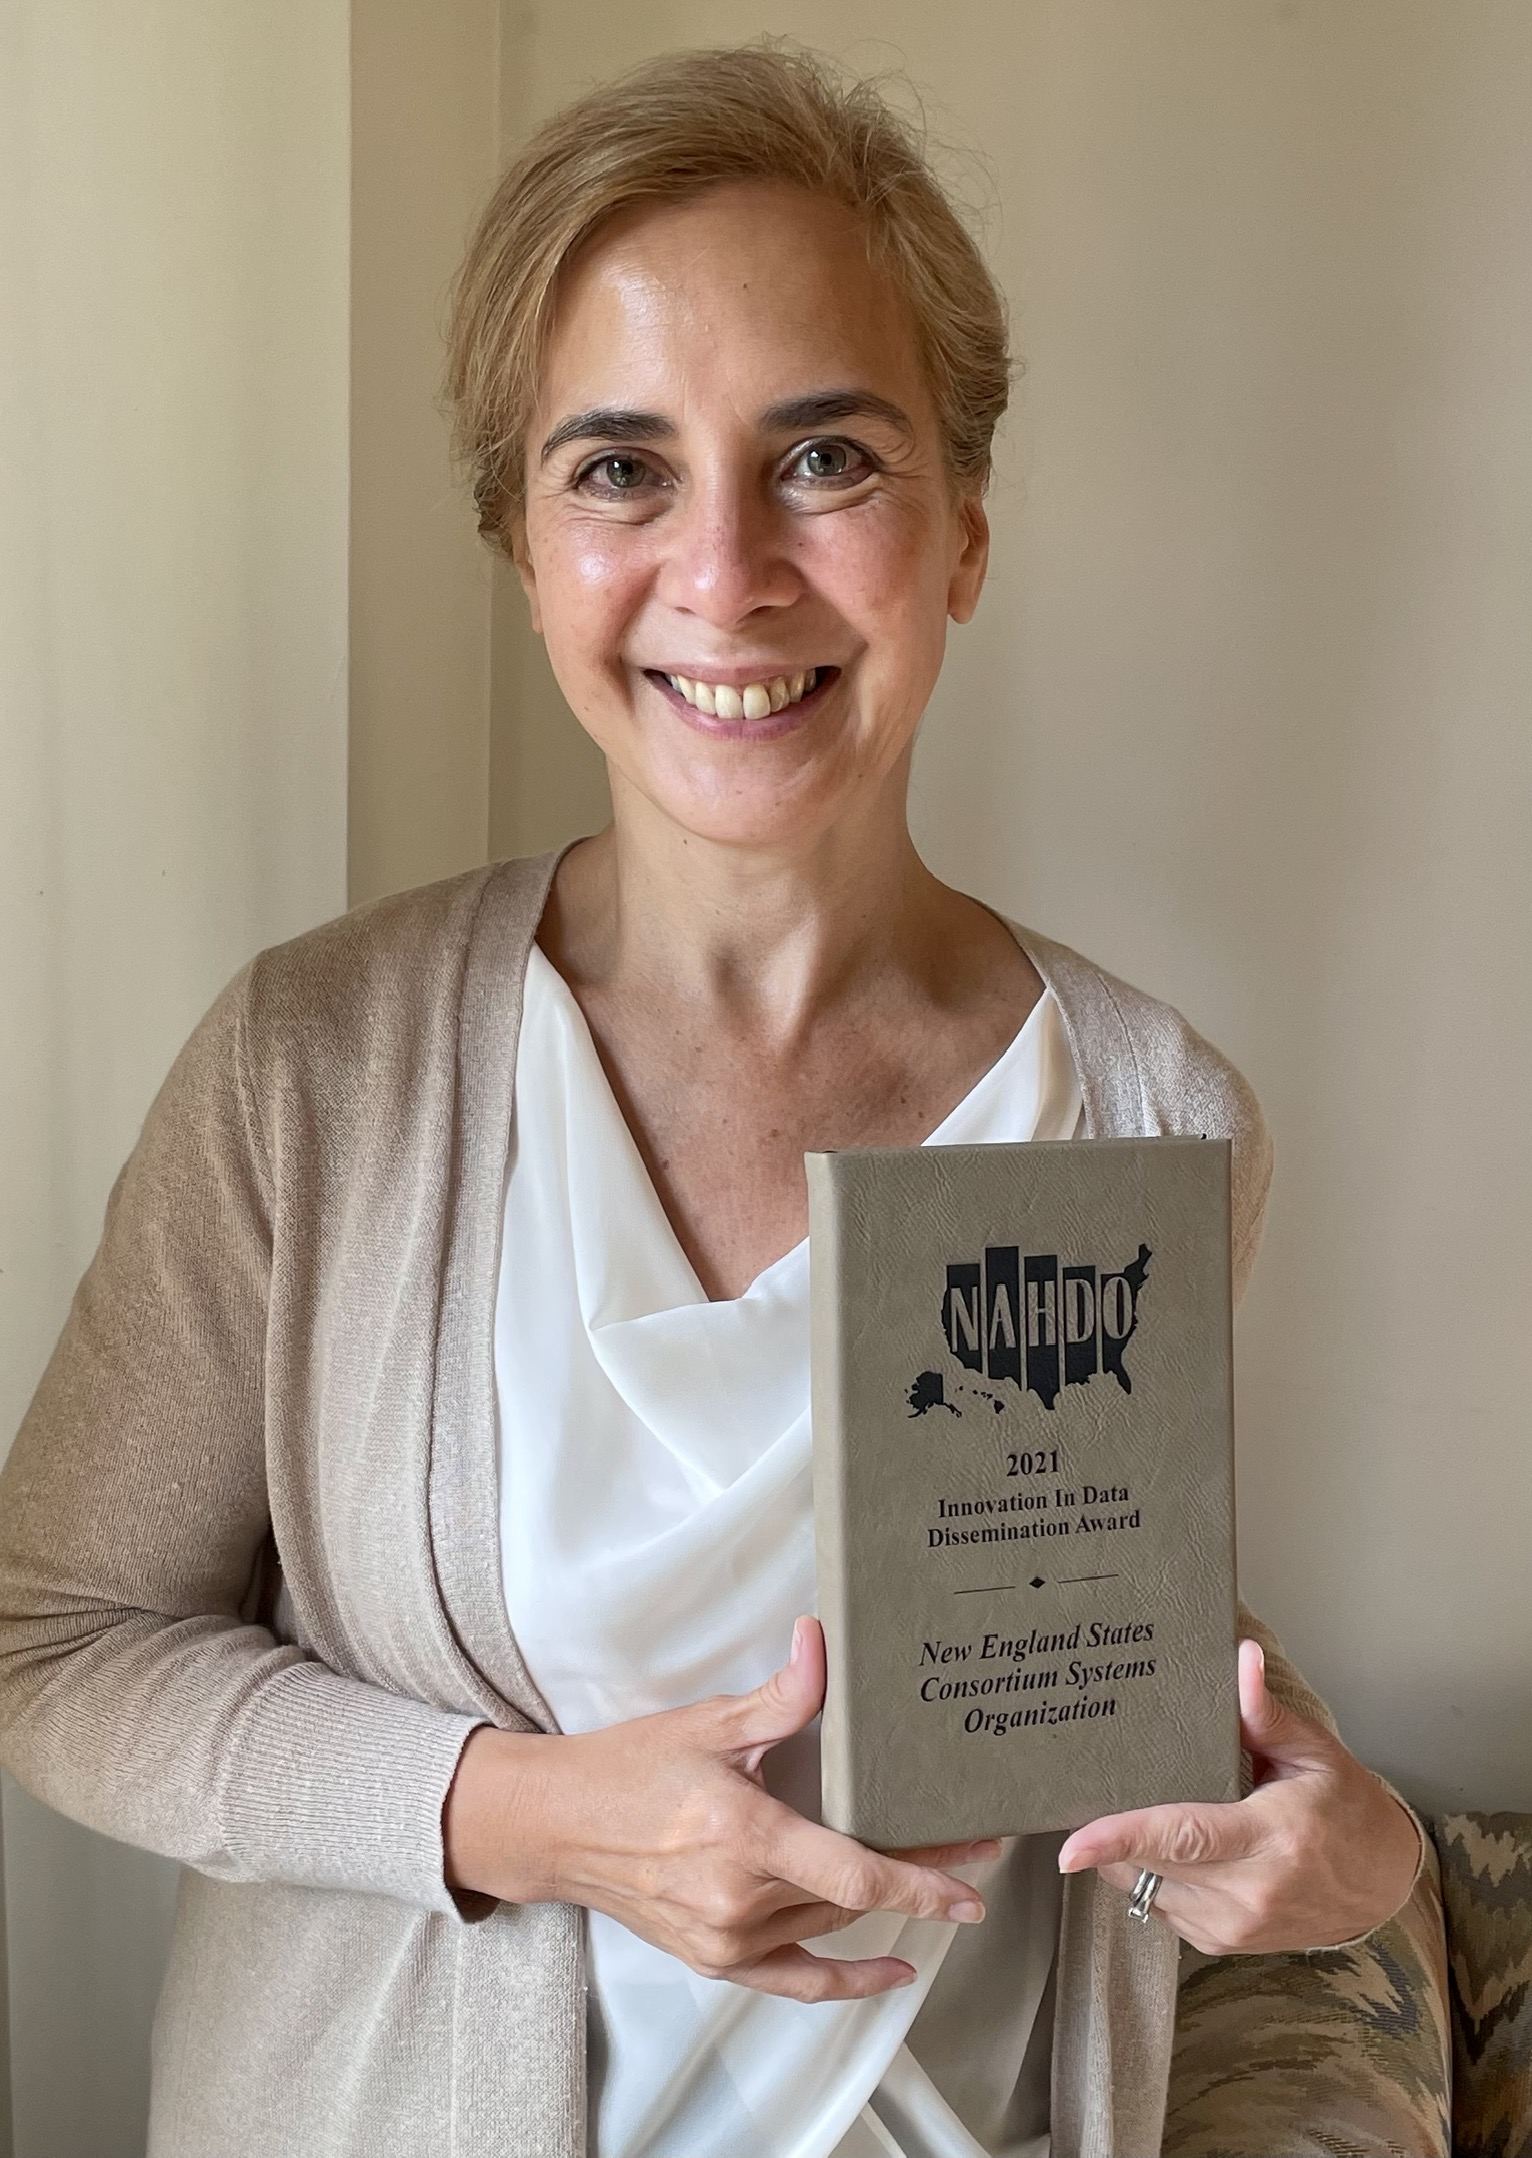 Elena Nicolella receives an award